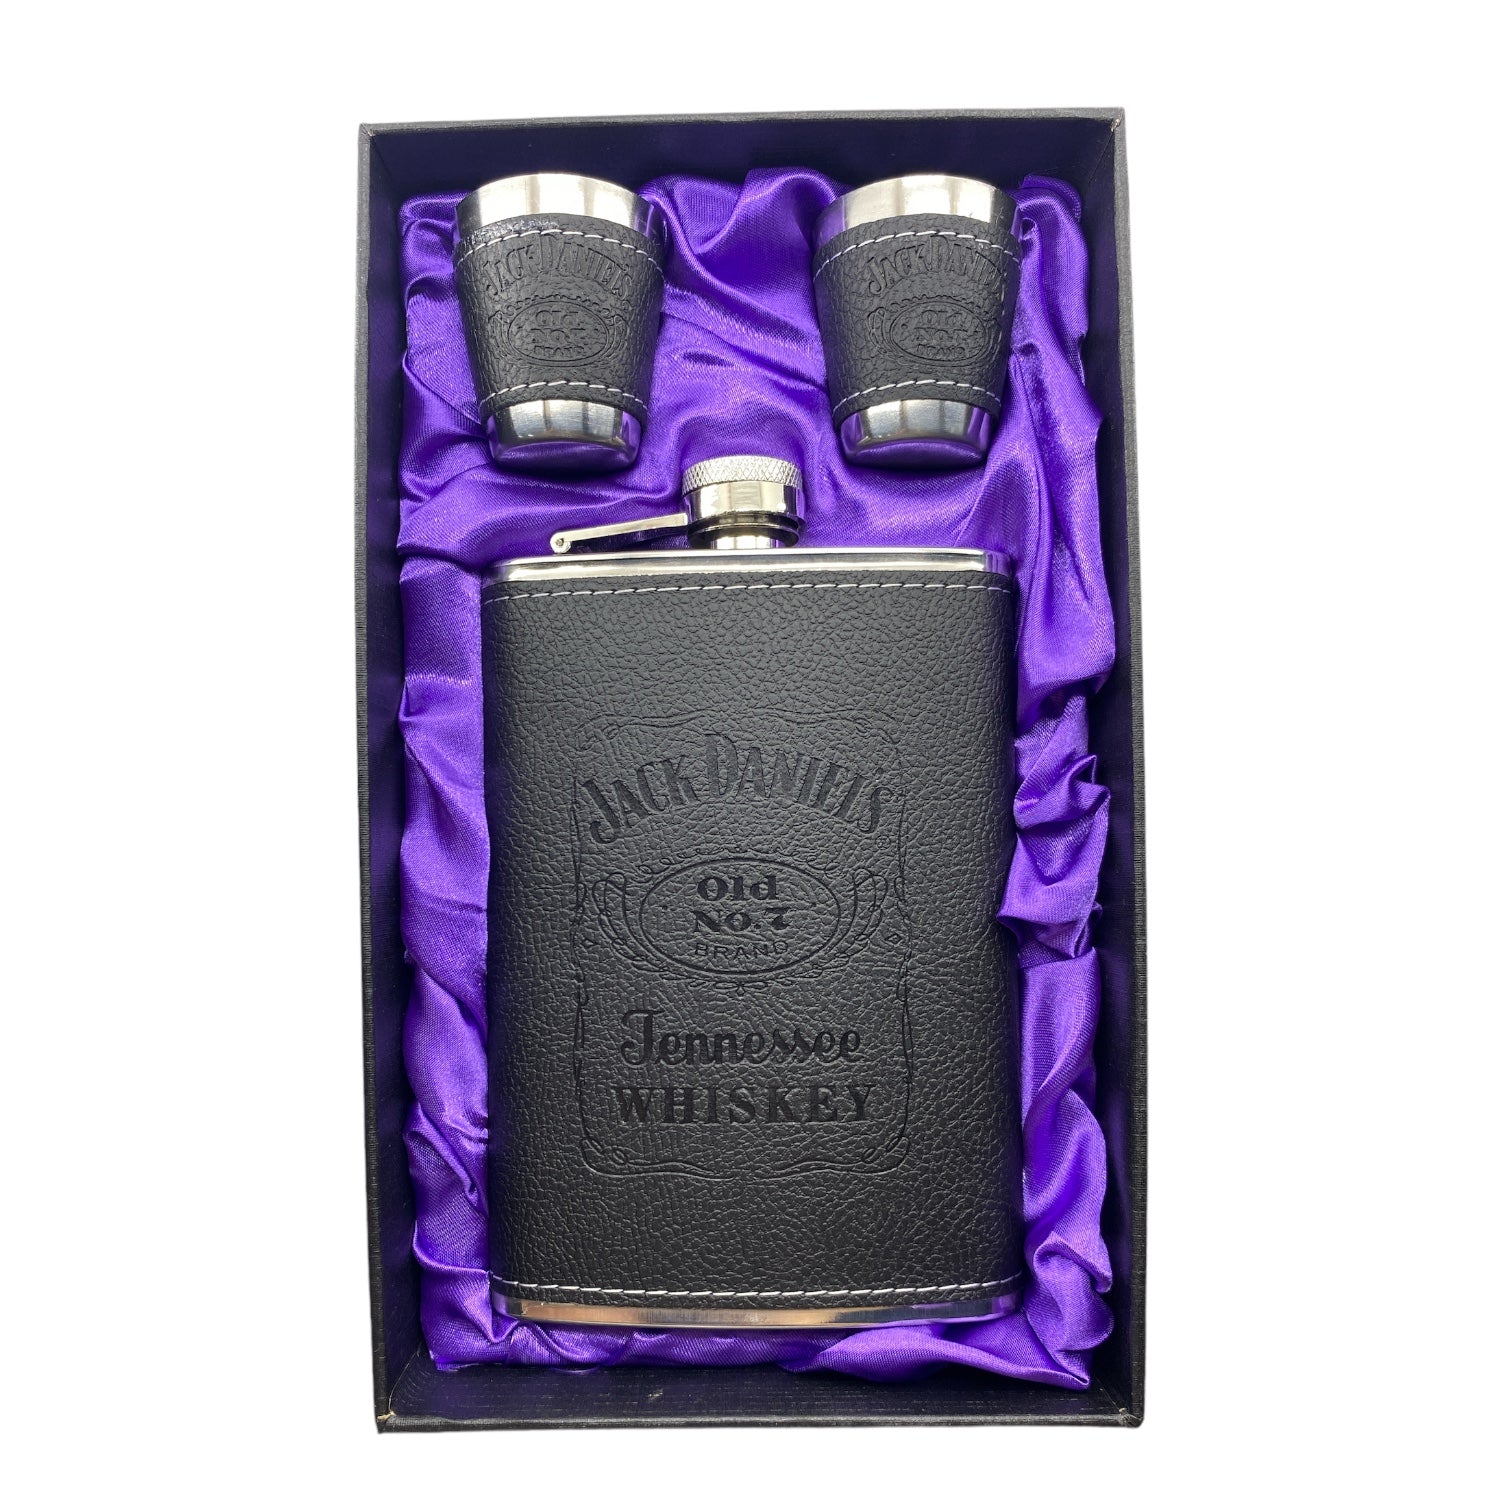 Whiskera Jack Daniel's cuero negra + 2 copas VIC-74